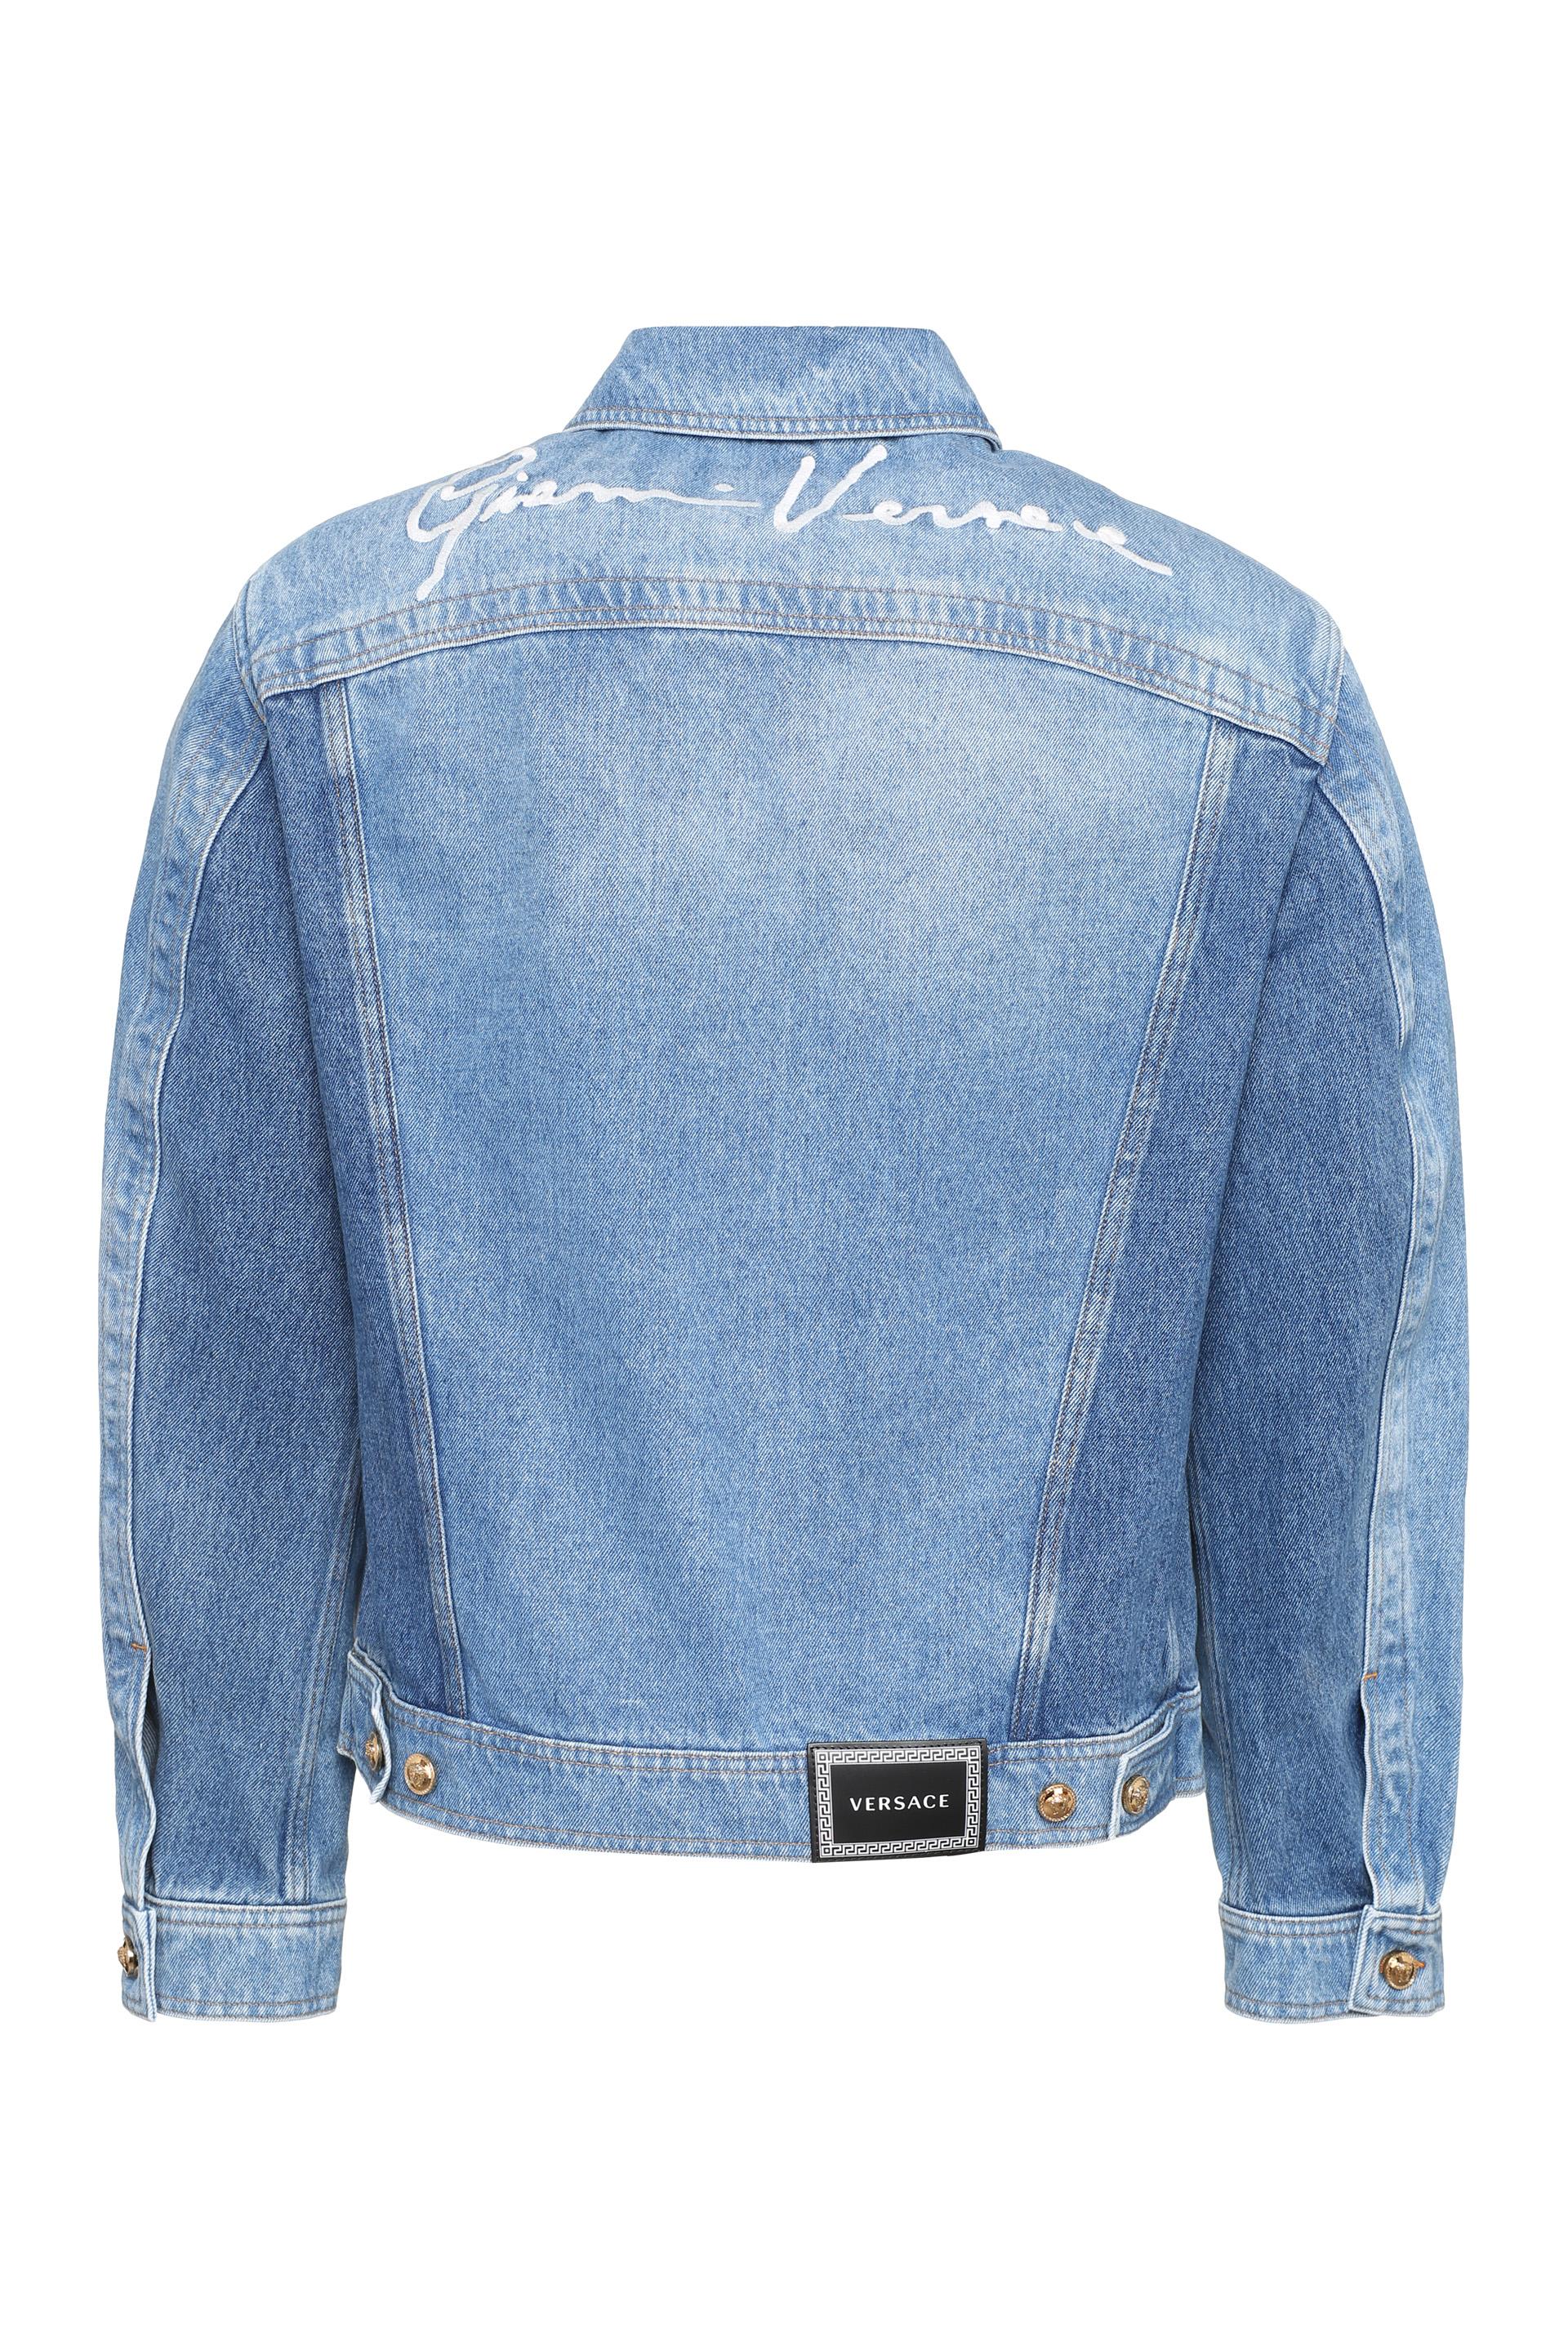 Versace Denim Jacket in Blue for Men - Lyst